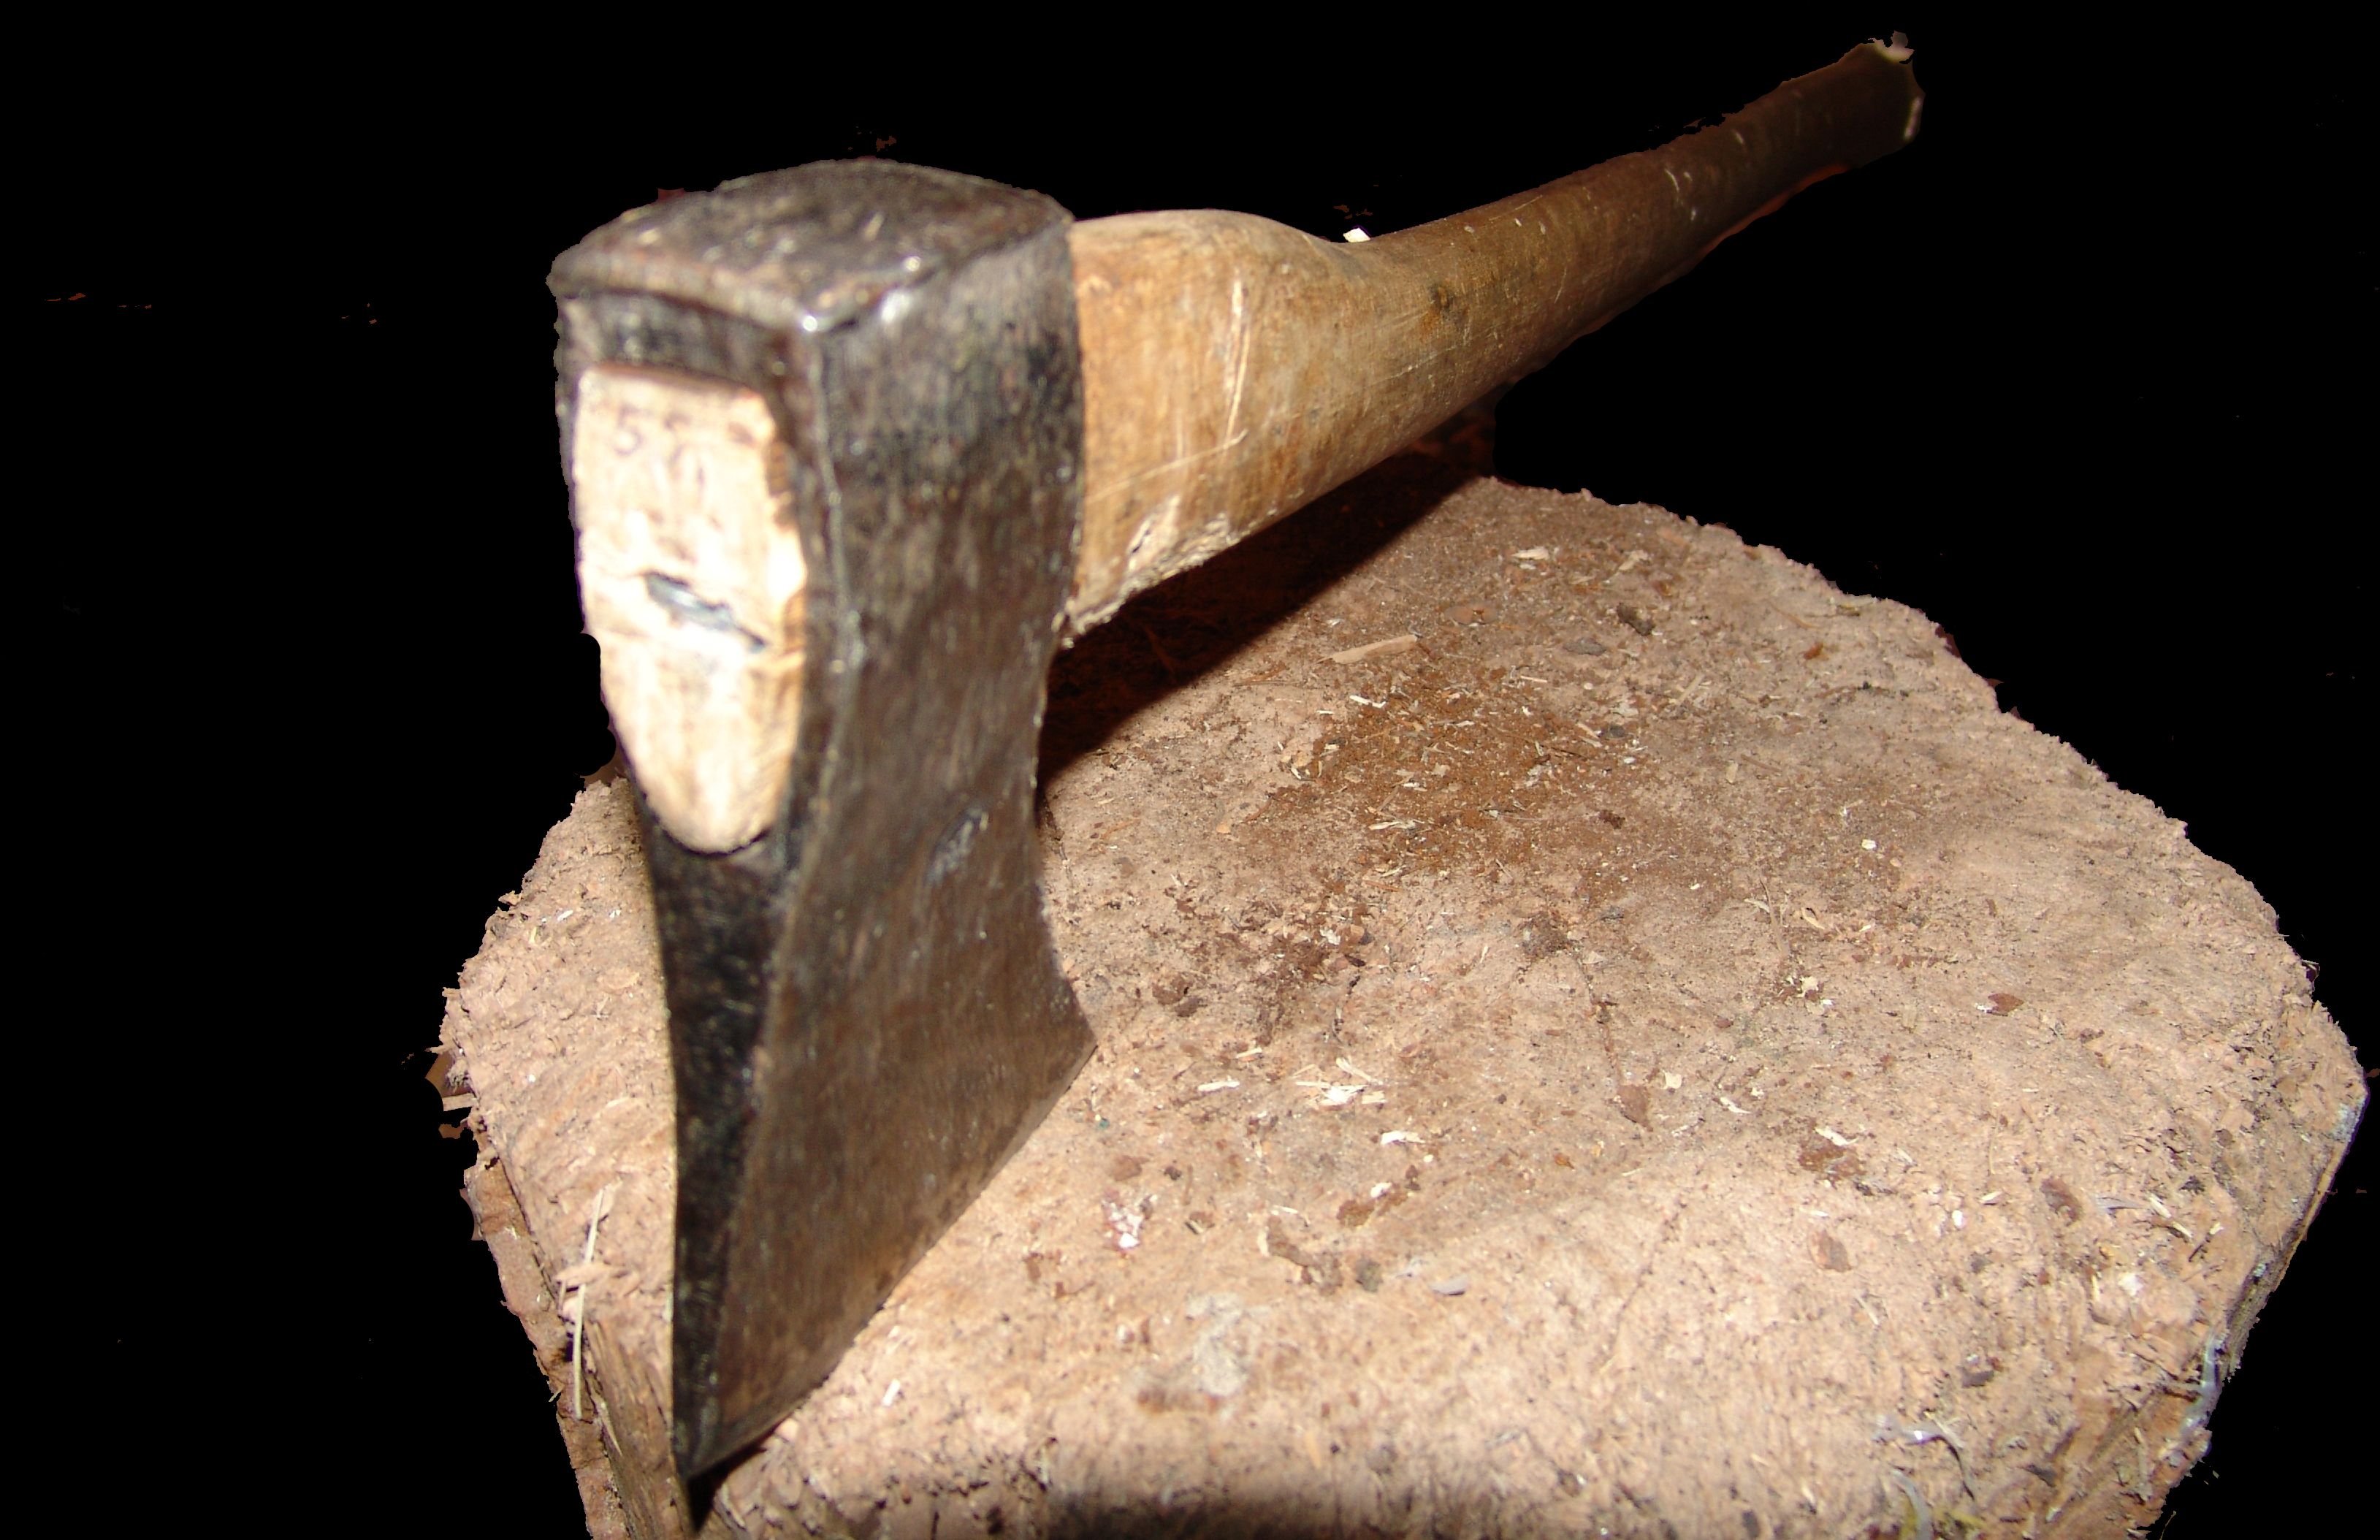 Lathe hammer